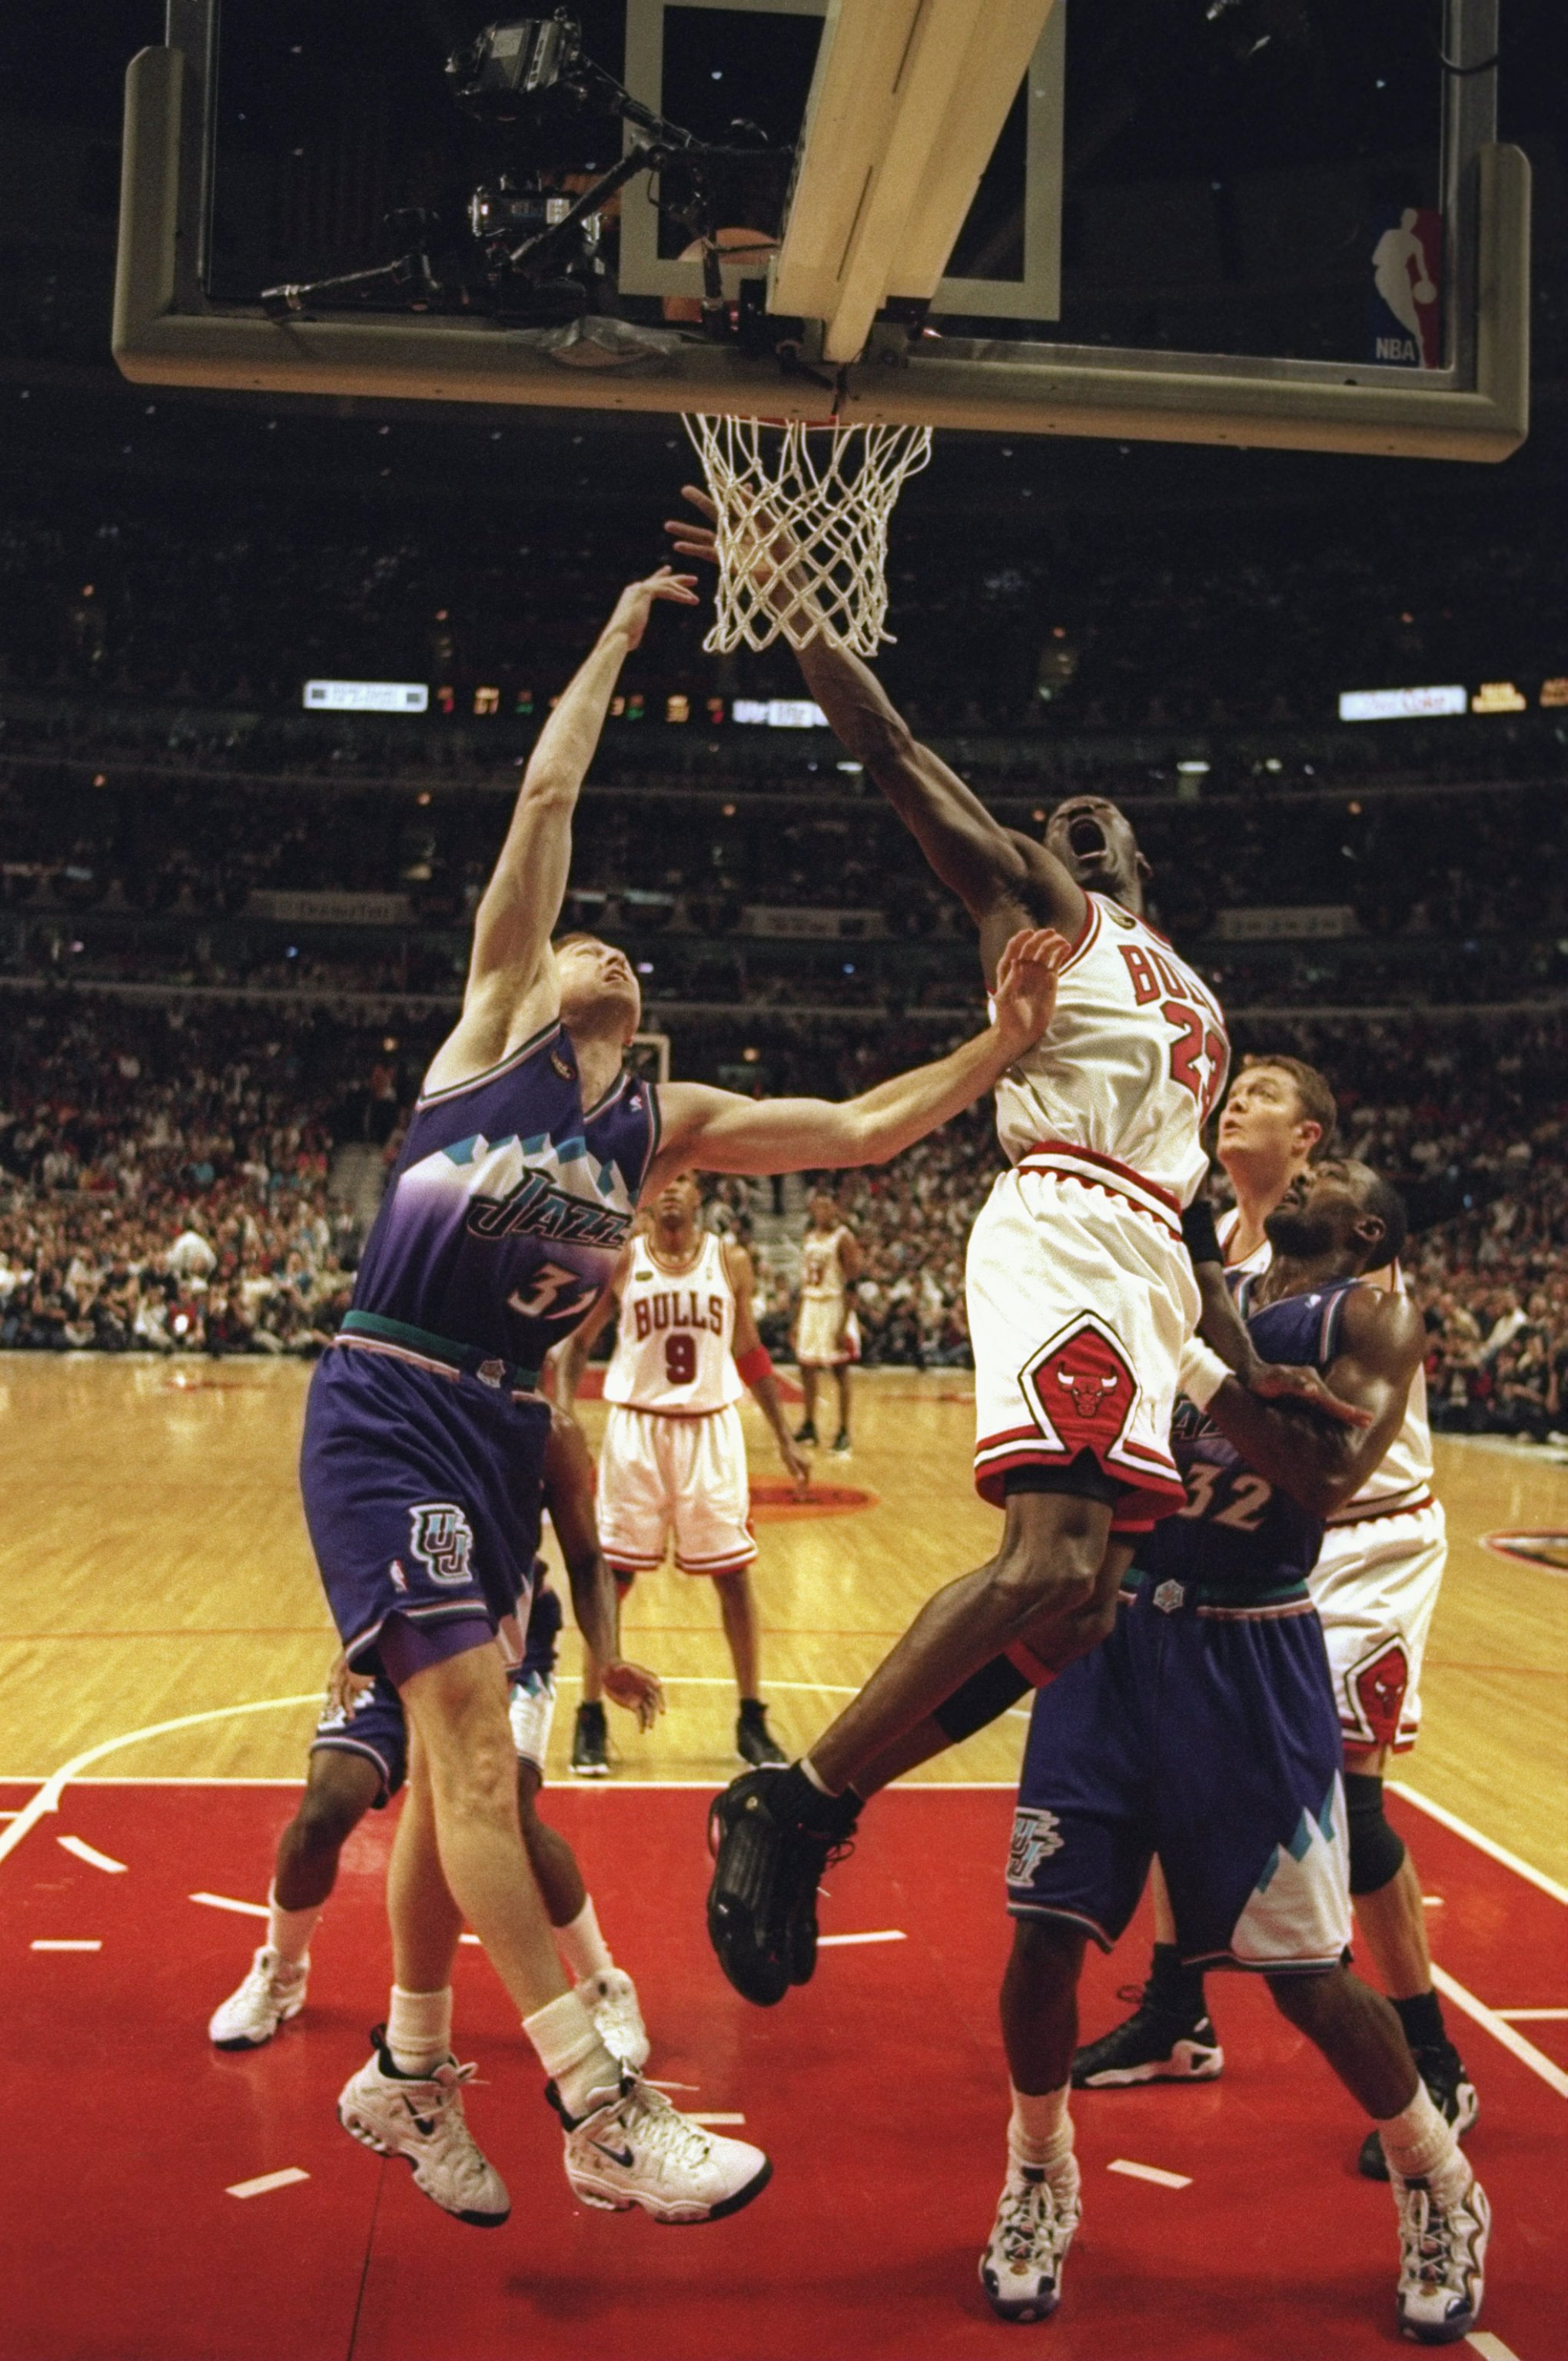 Michael Jordan: Winning 6th NBA title with Bulls was “trying year